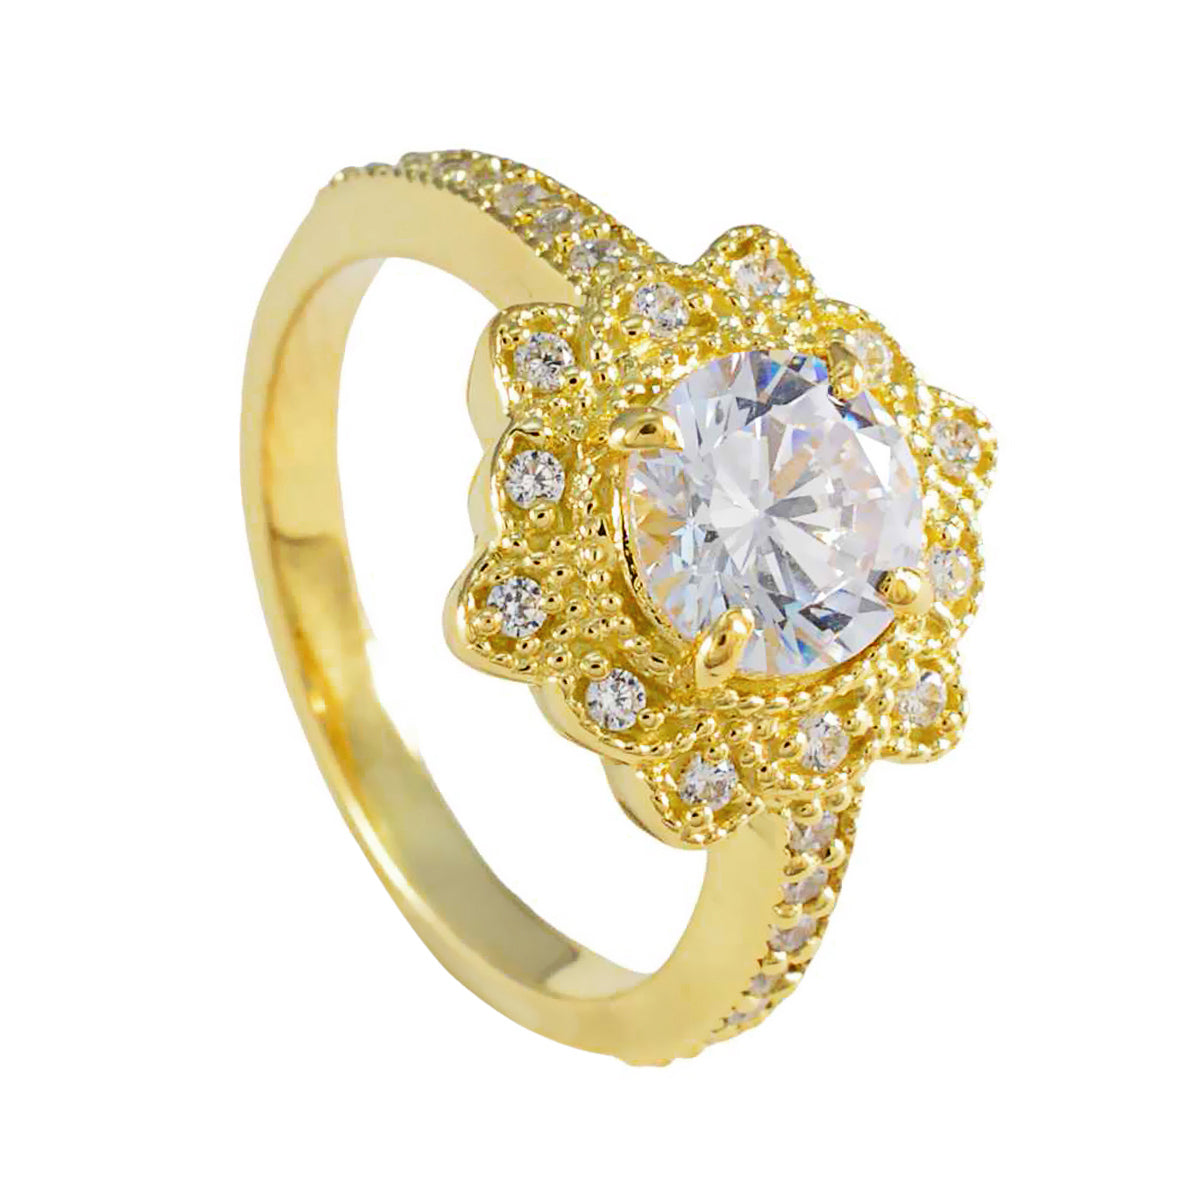 Riyo Custom Silver Ring With Yellow Gold Plating White CZ Stone Round Shape Prong Setting Bridal Jewelry Graduation Ring